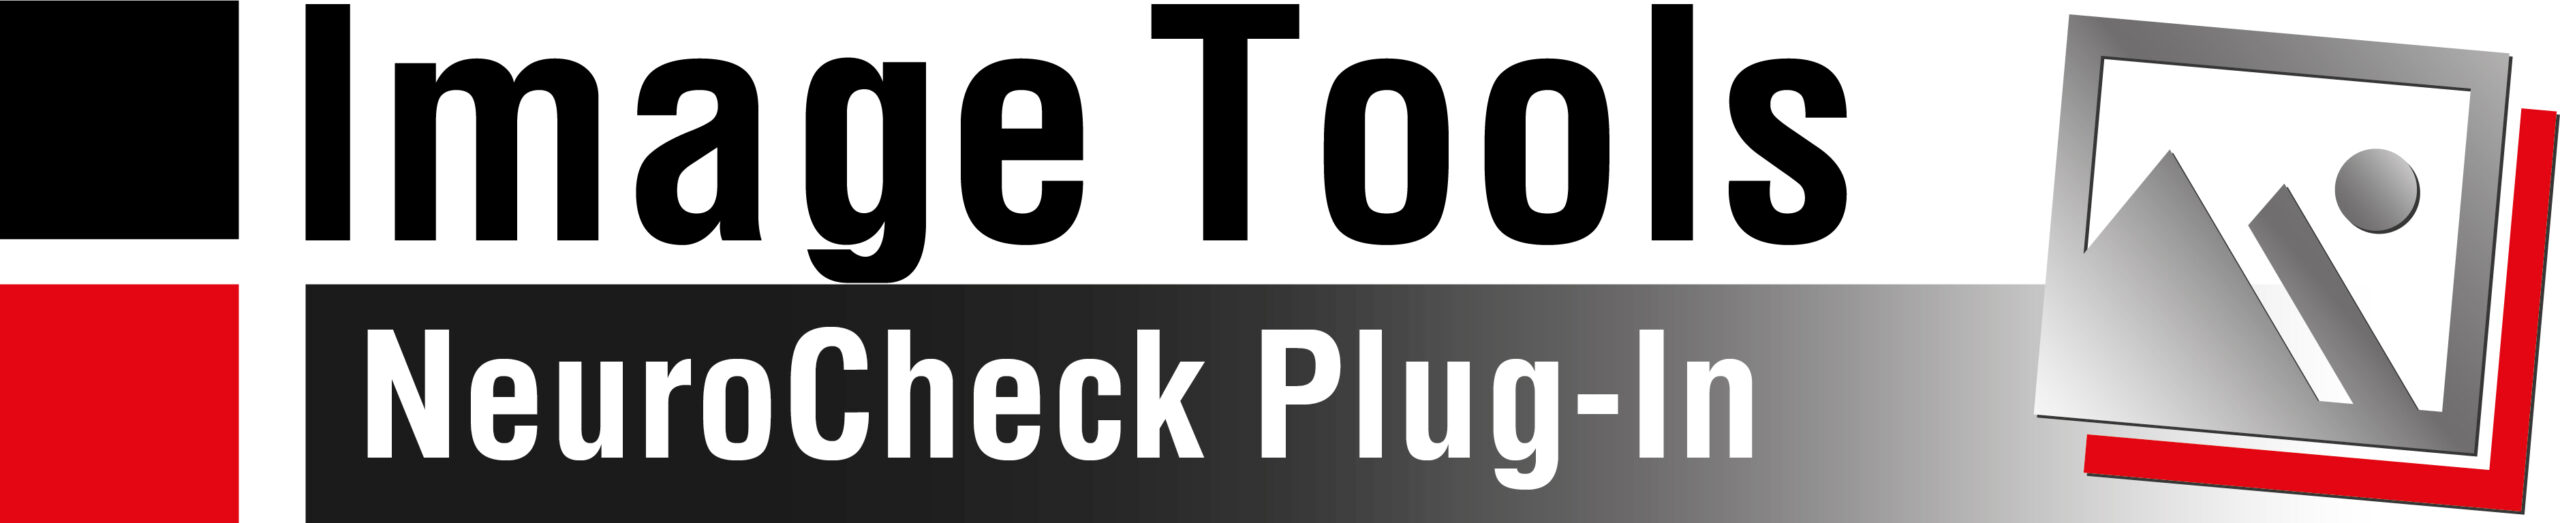 NeuroCheck Plug-In Image Tools (Image © NeuroCheck)